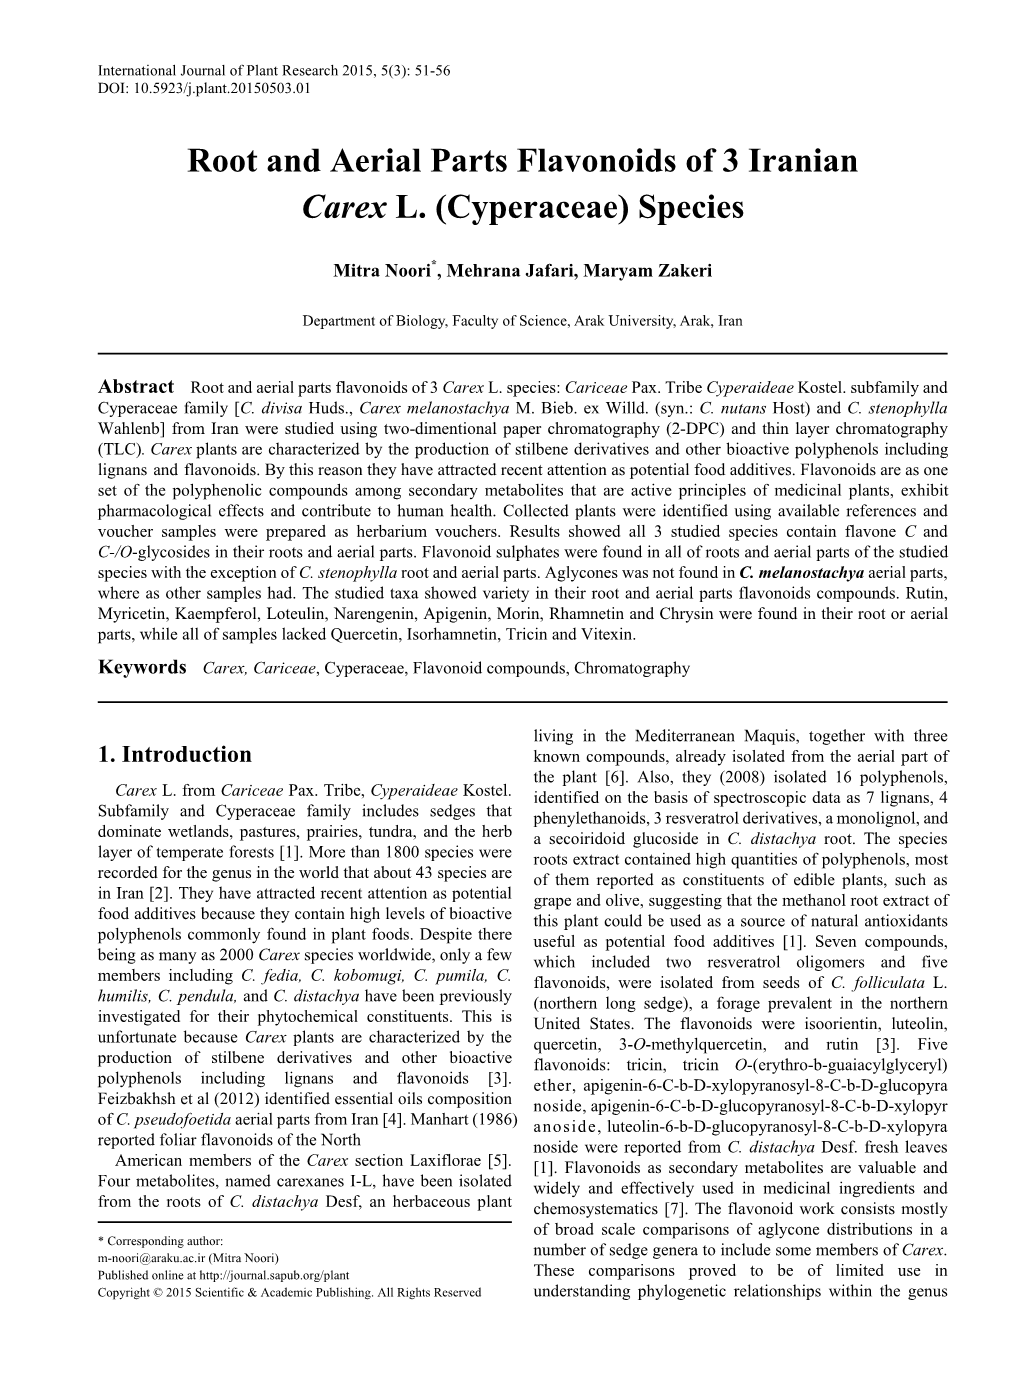 &lt;I&gt; Carex, Cariceae&lt;/I&gt;, Cyperaceae, Flavonoid Compounds, Chromatography